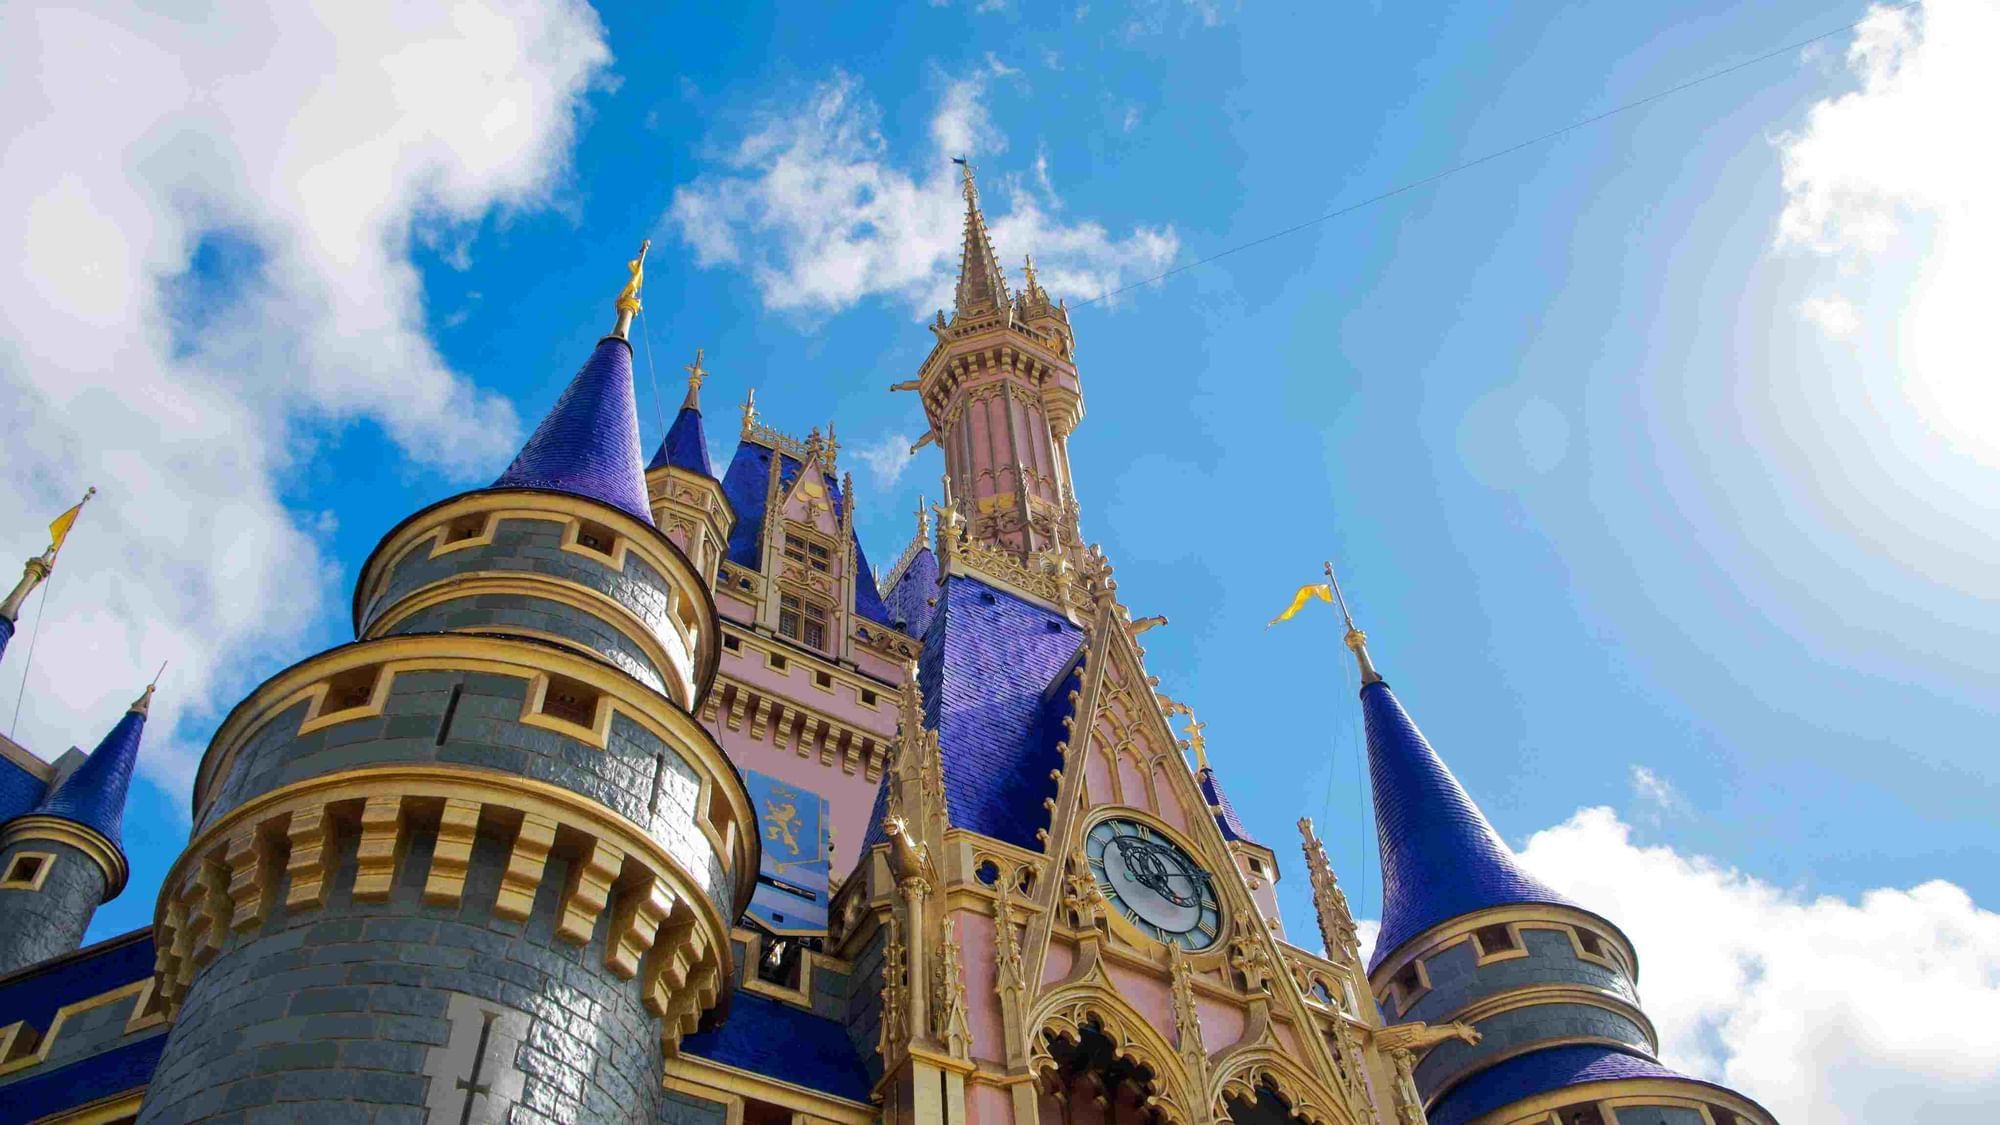 Cinderella's Castle at Magic Kingdom during summer at walt disney world resort